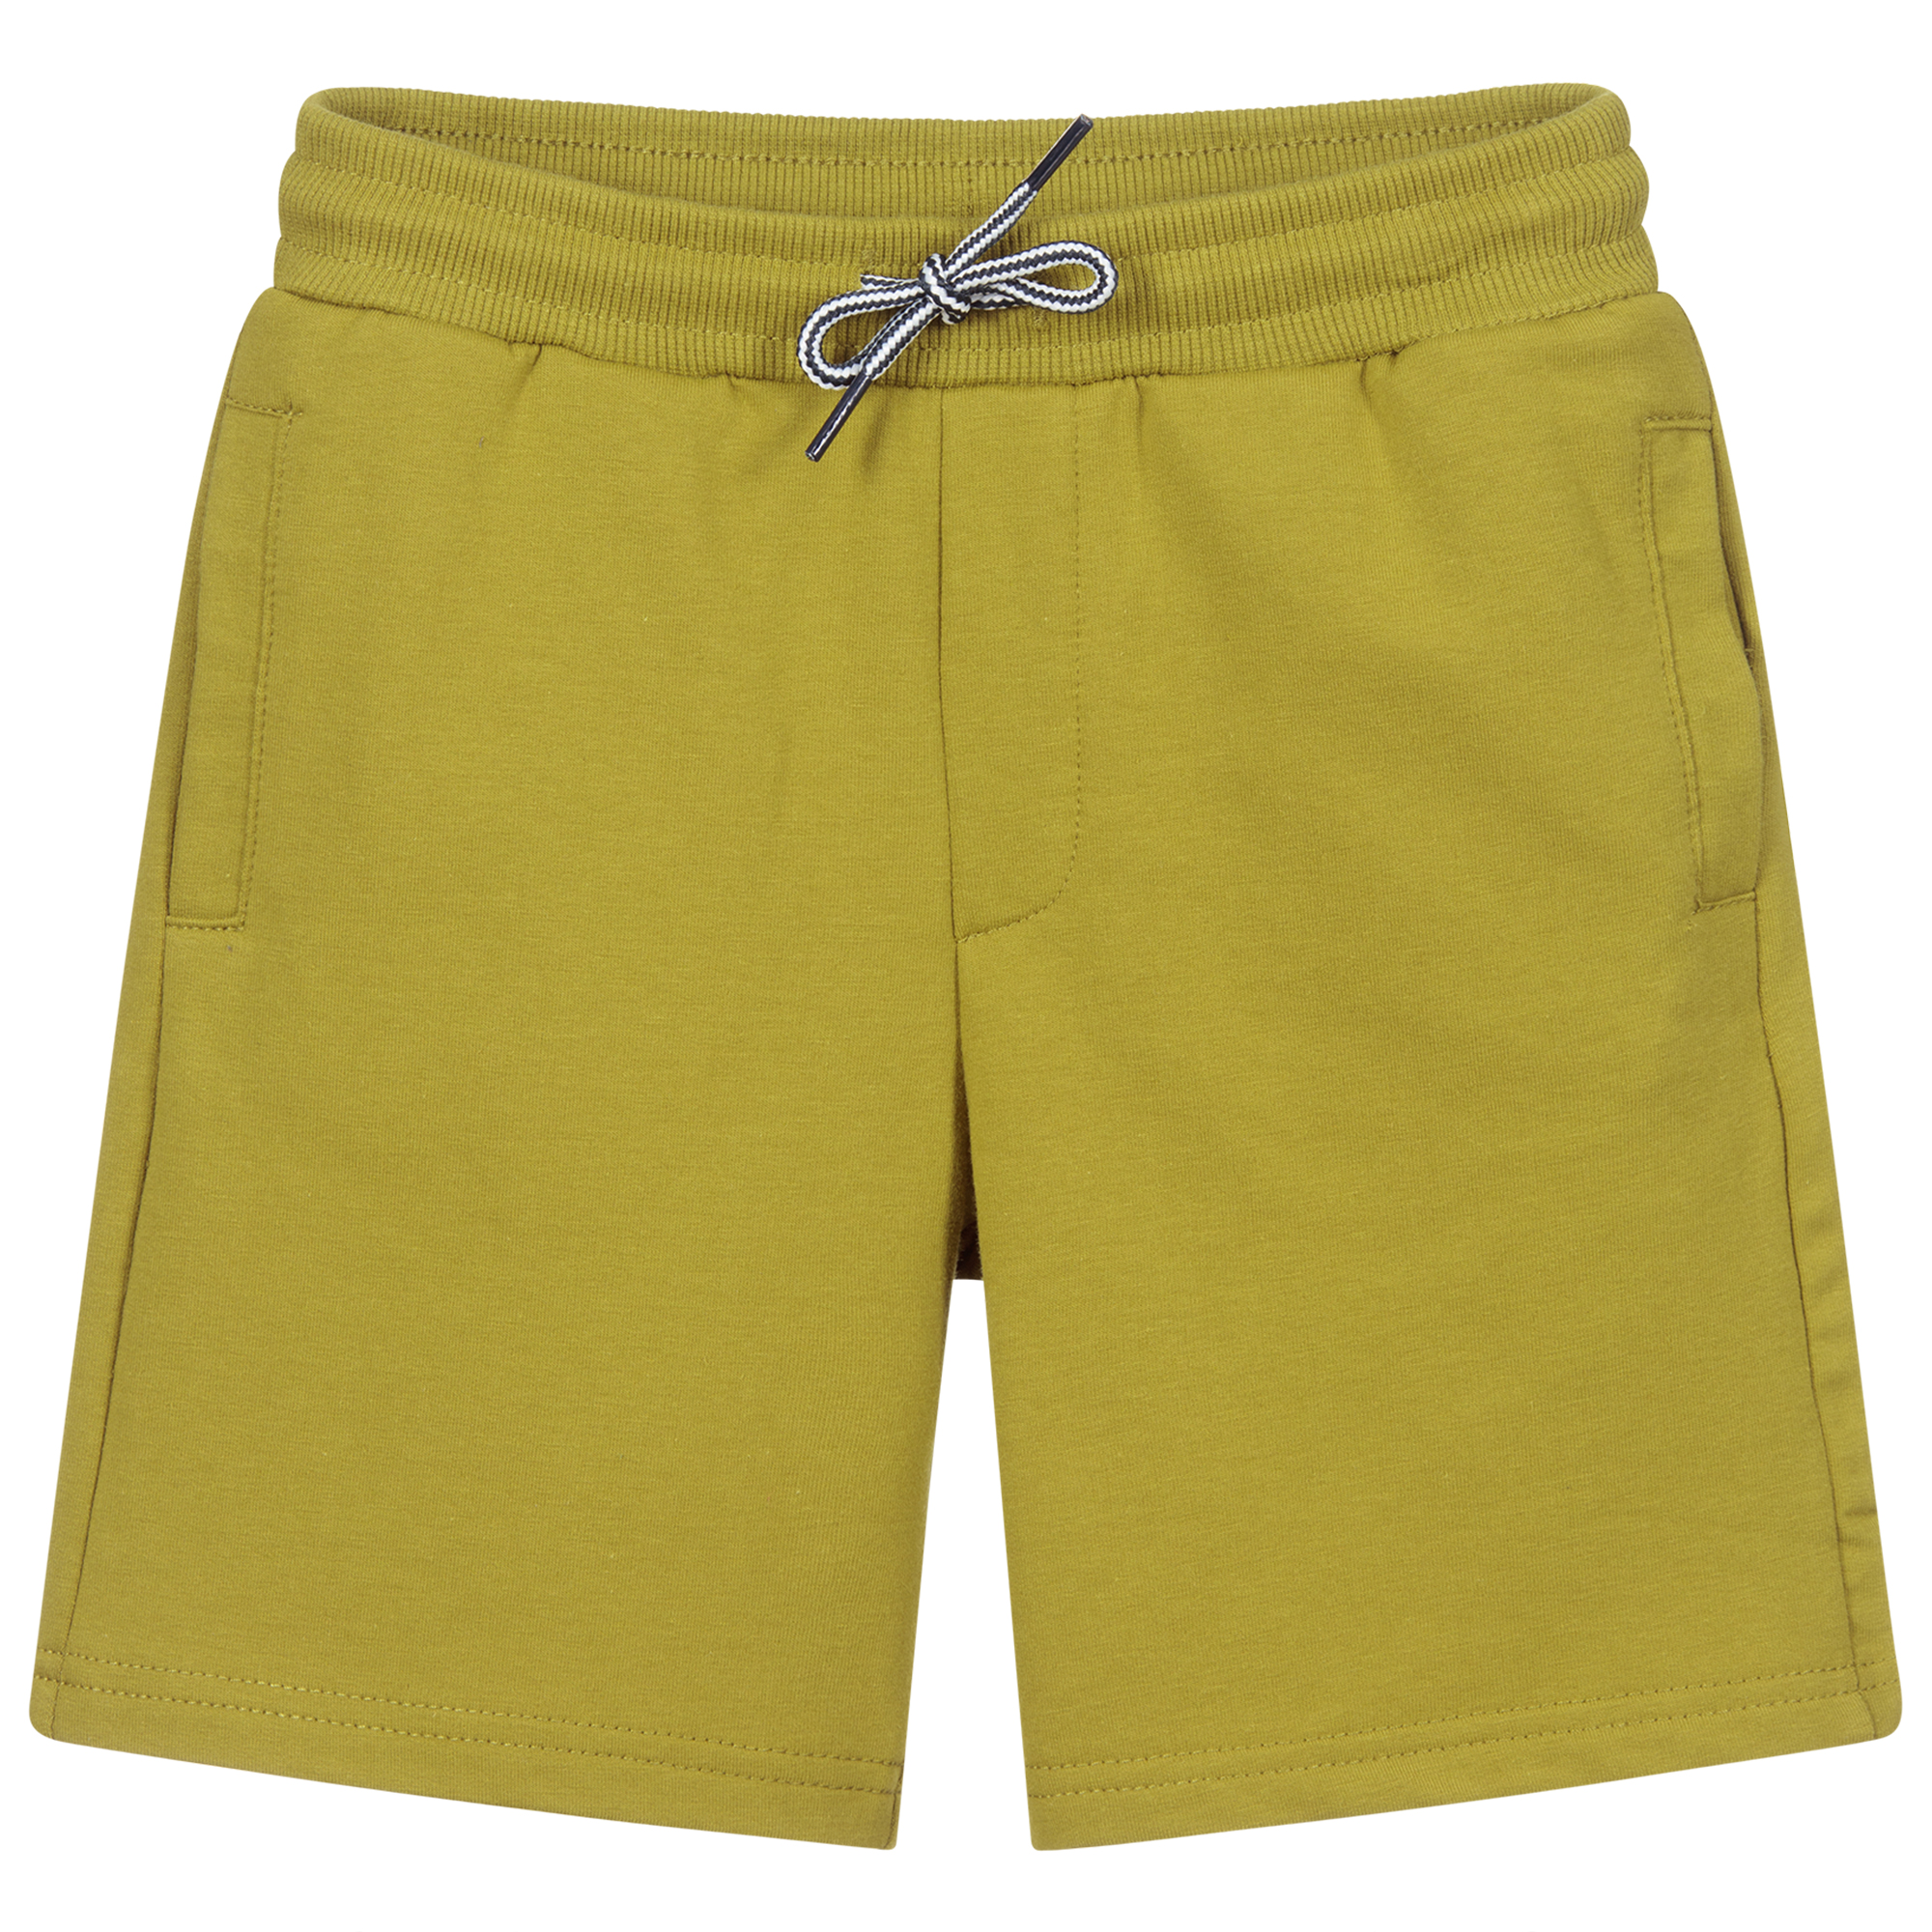 Mayoral - Boys Grey Jersey Shorts